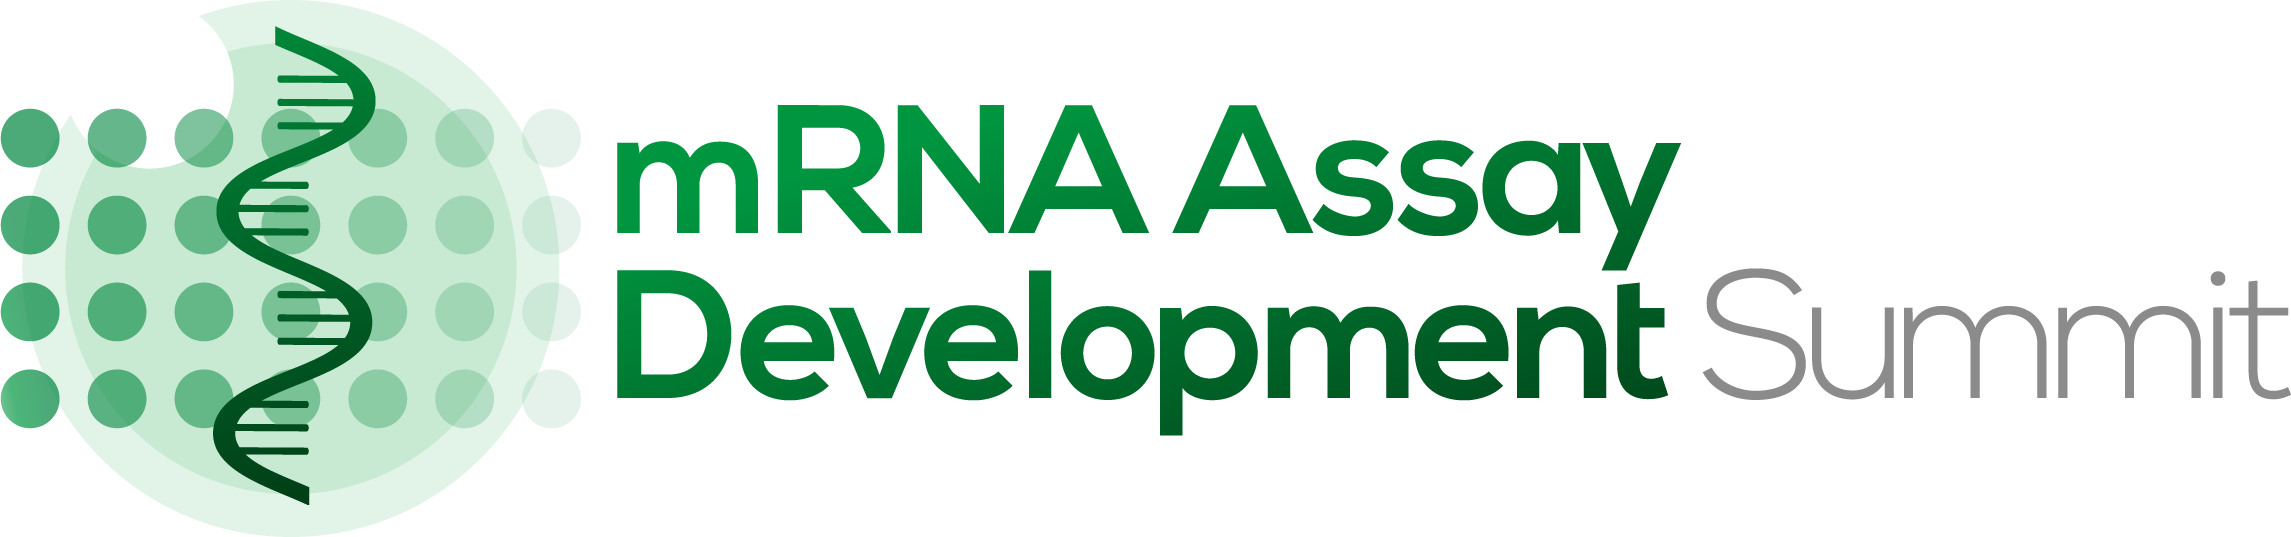 mRNA Assay Development Summit Logo